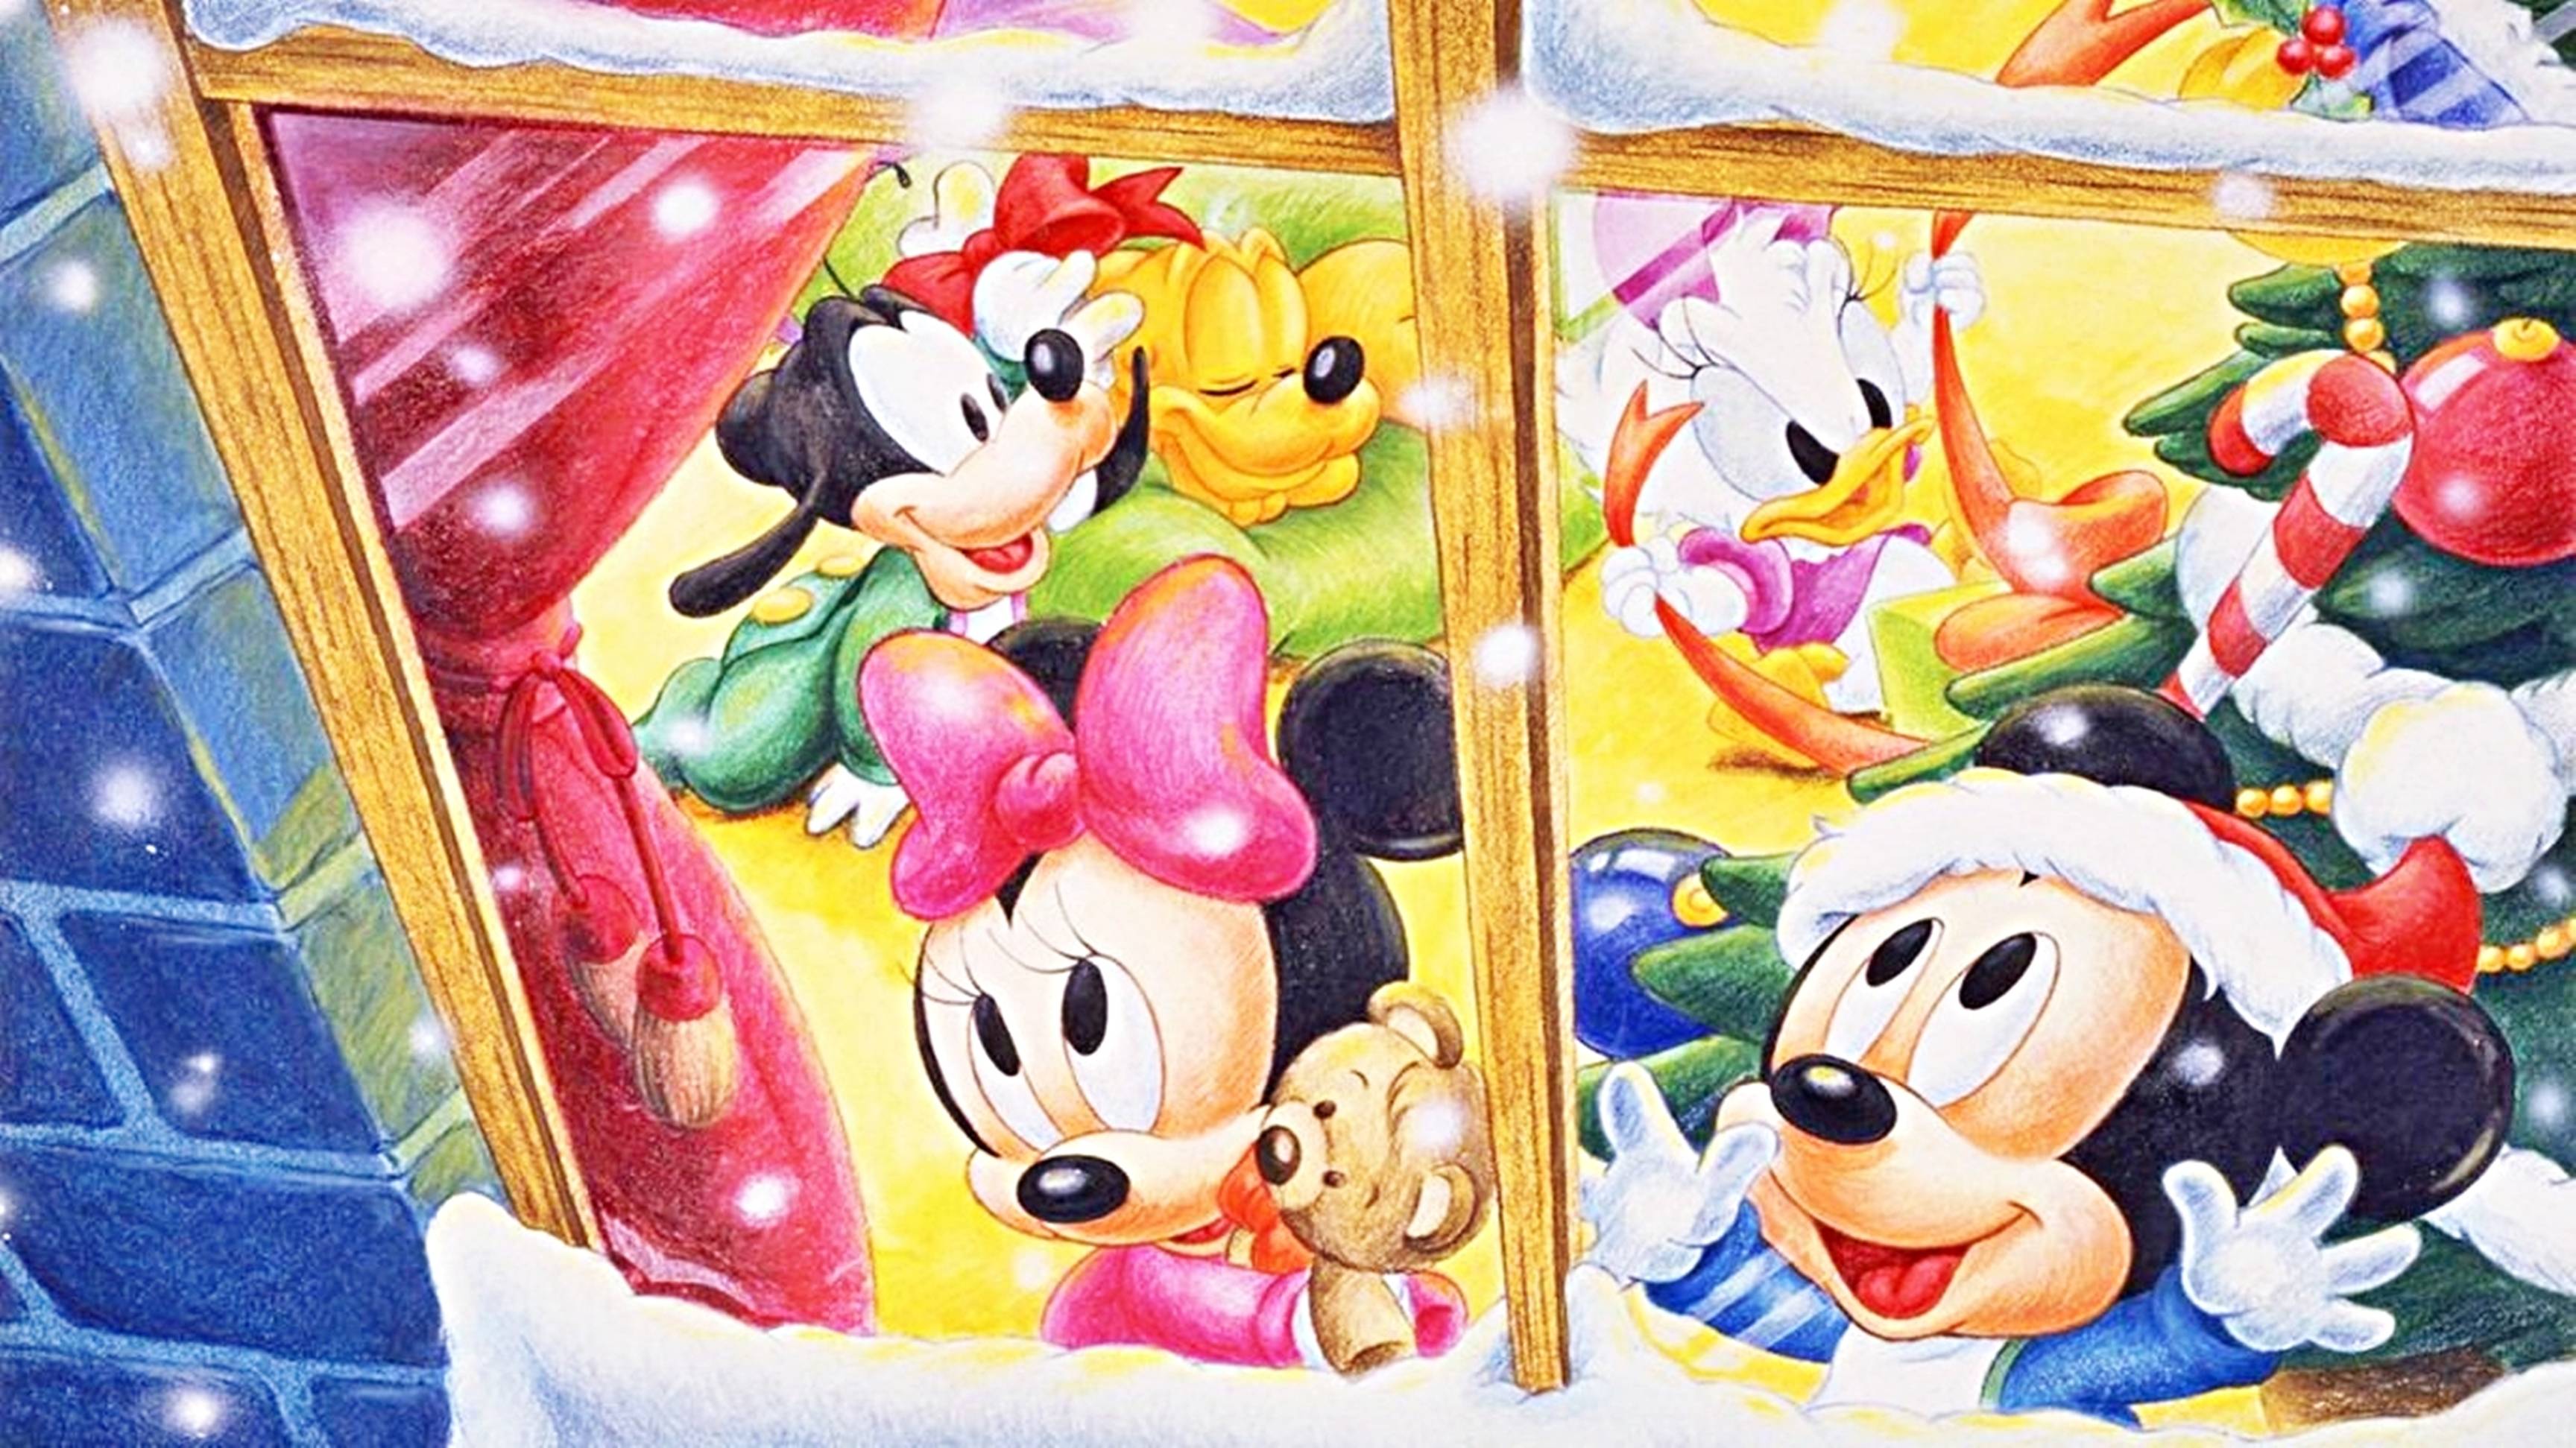 Gaming wallpaper games assassins creed, Disney